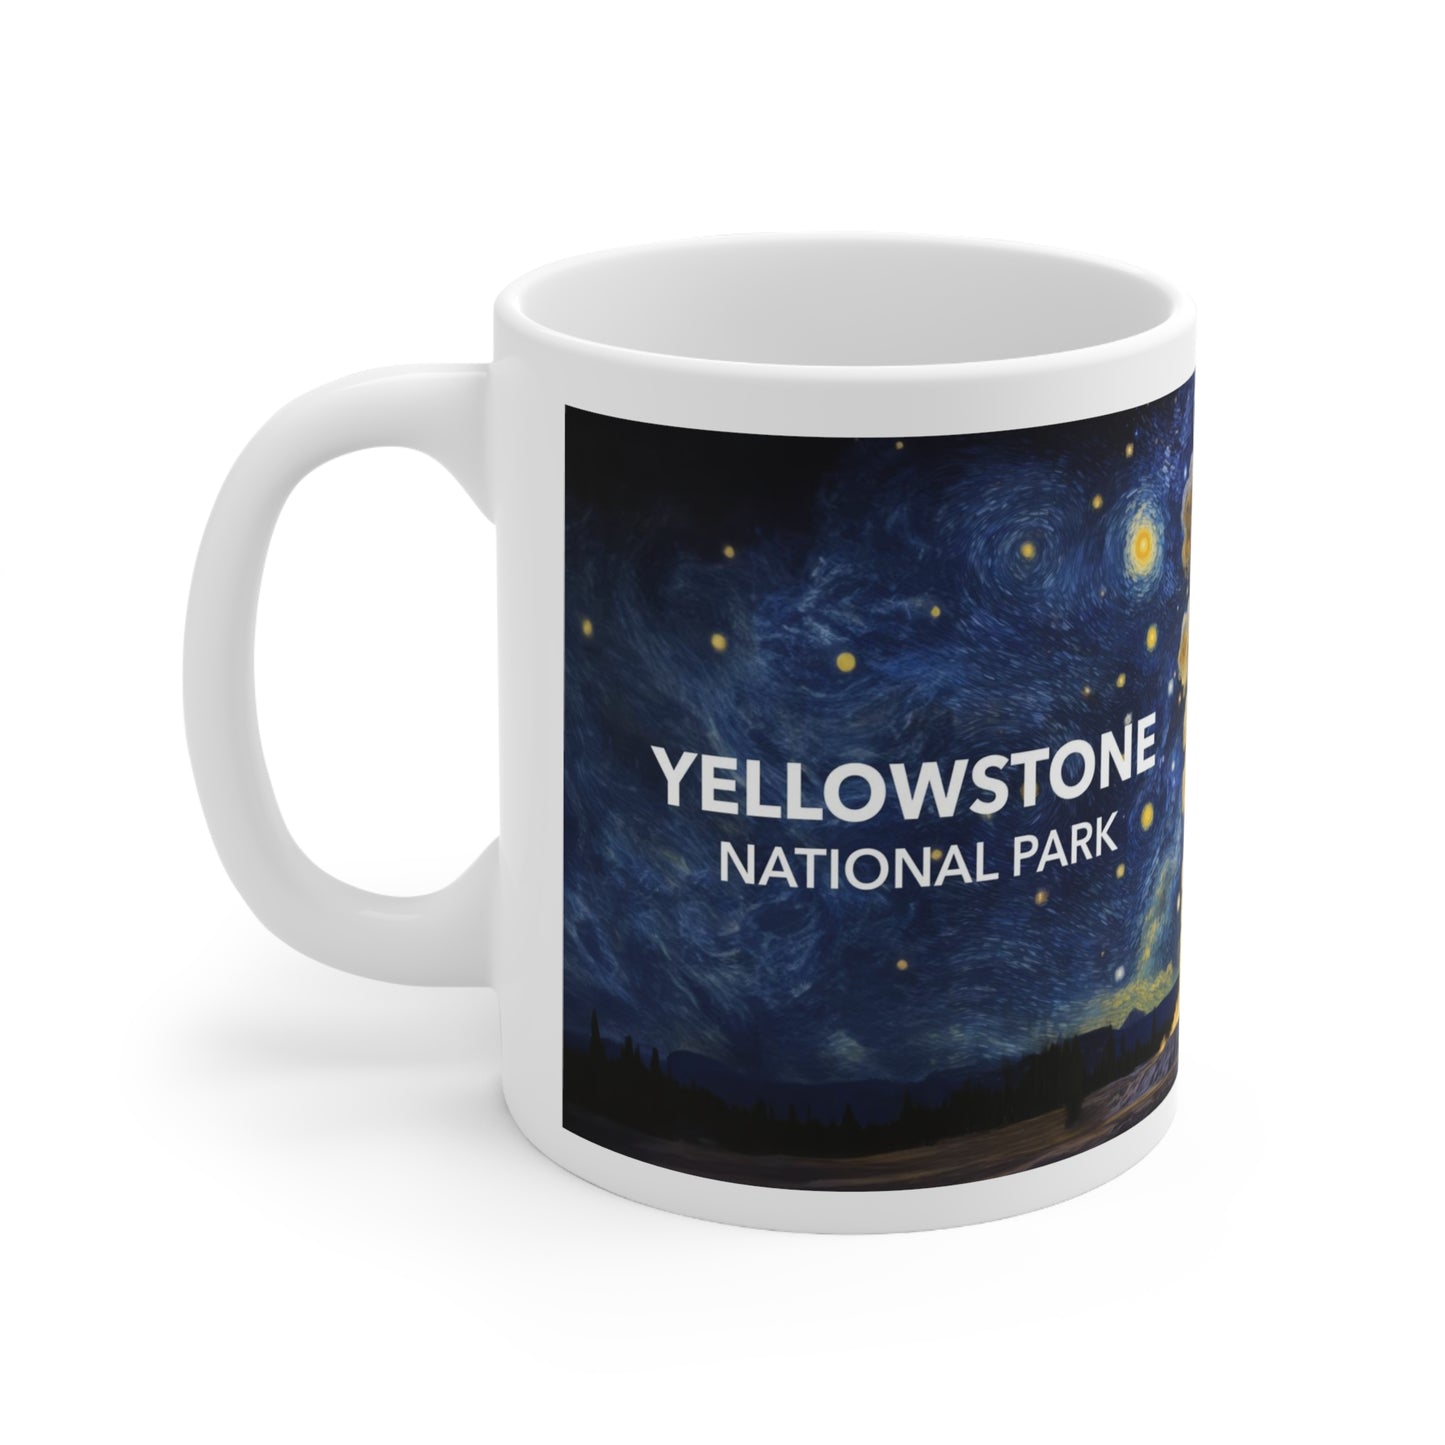 Yellowstone National Park Mug - Old Faithful Starry Night